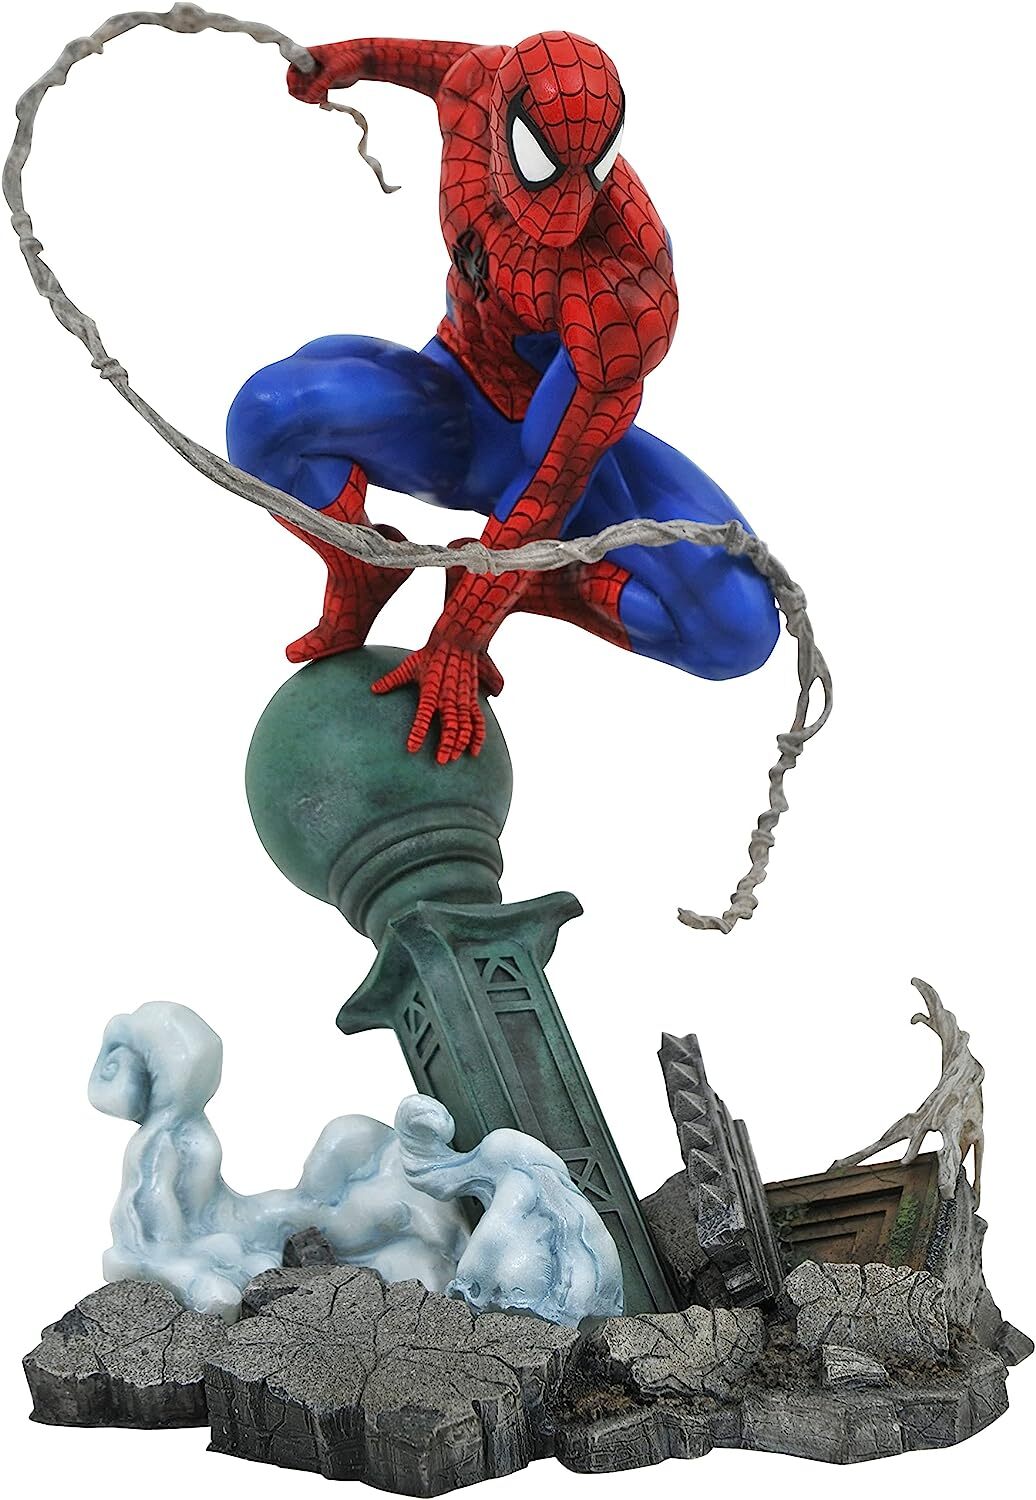  -  Marvel Gallery Spider-Man PVC Statue     8990       